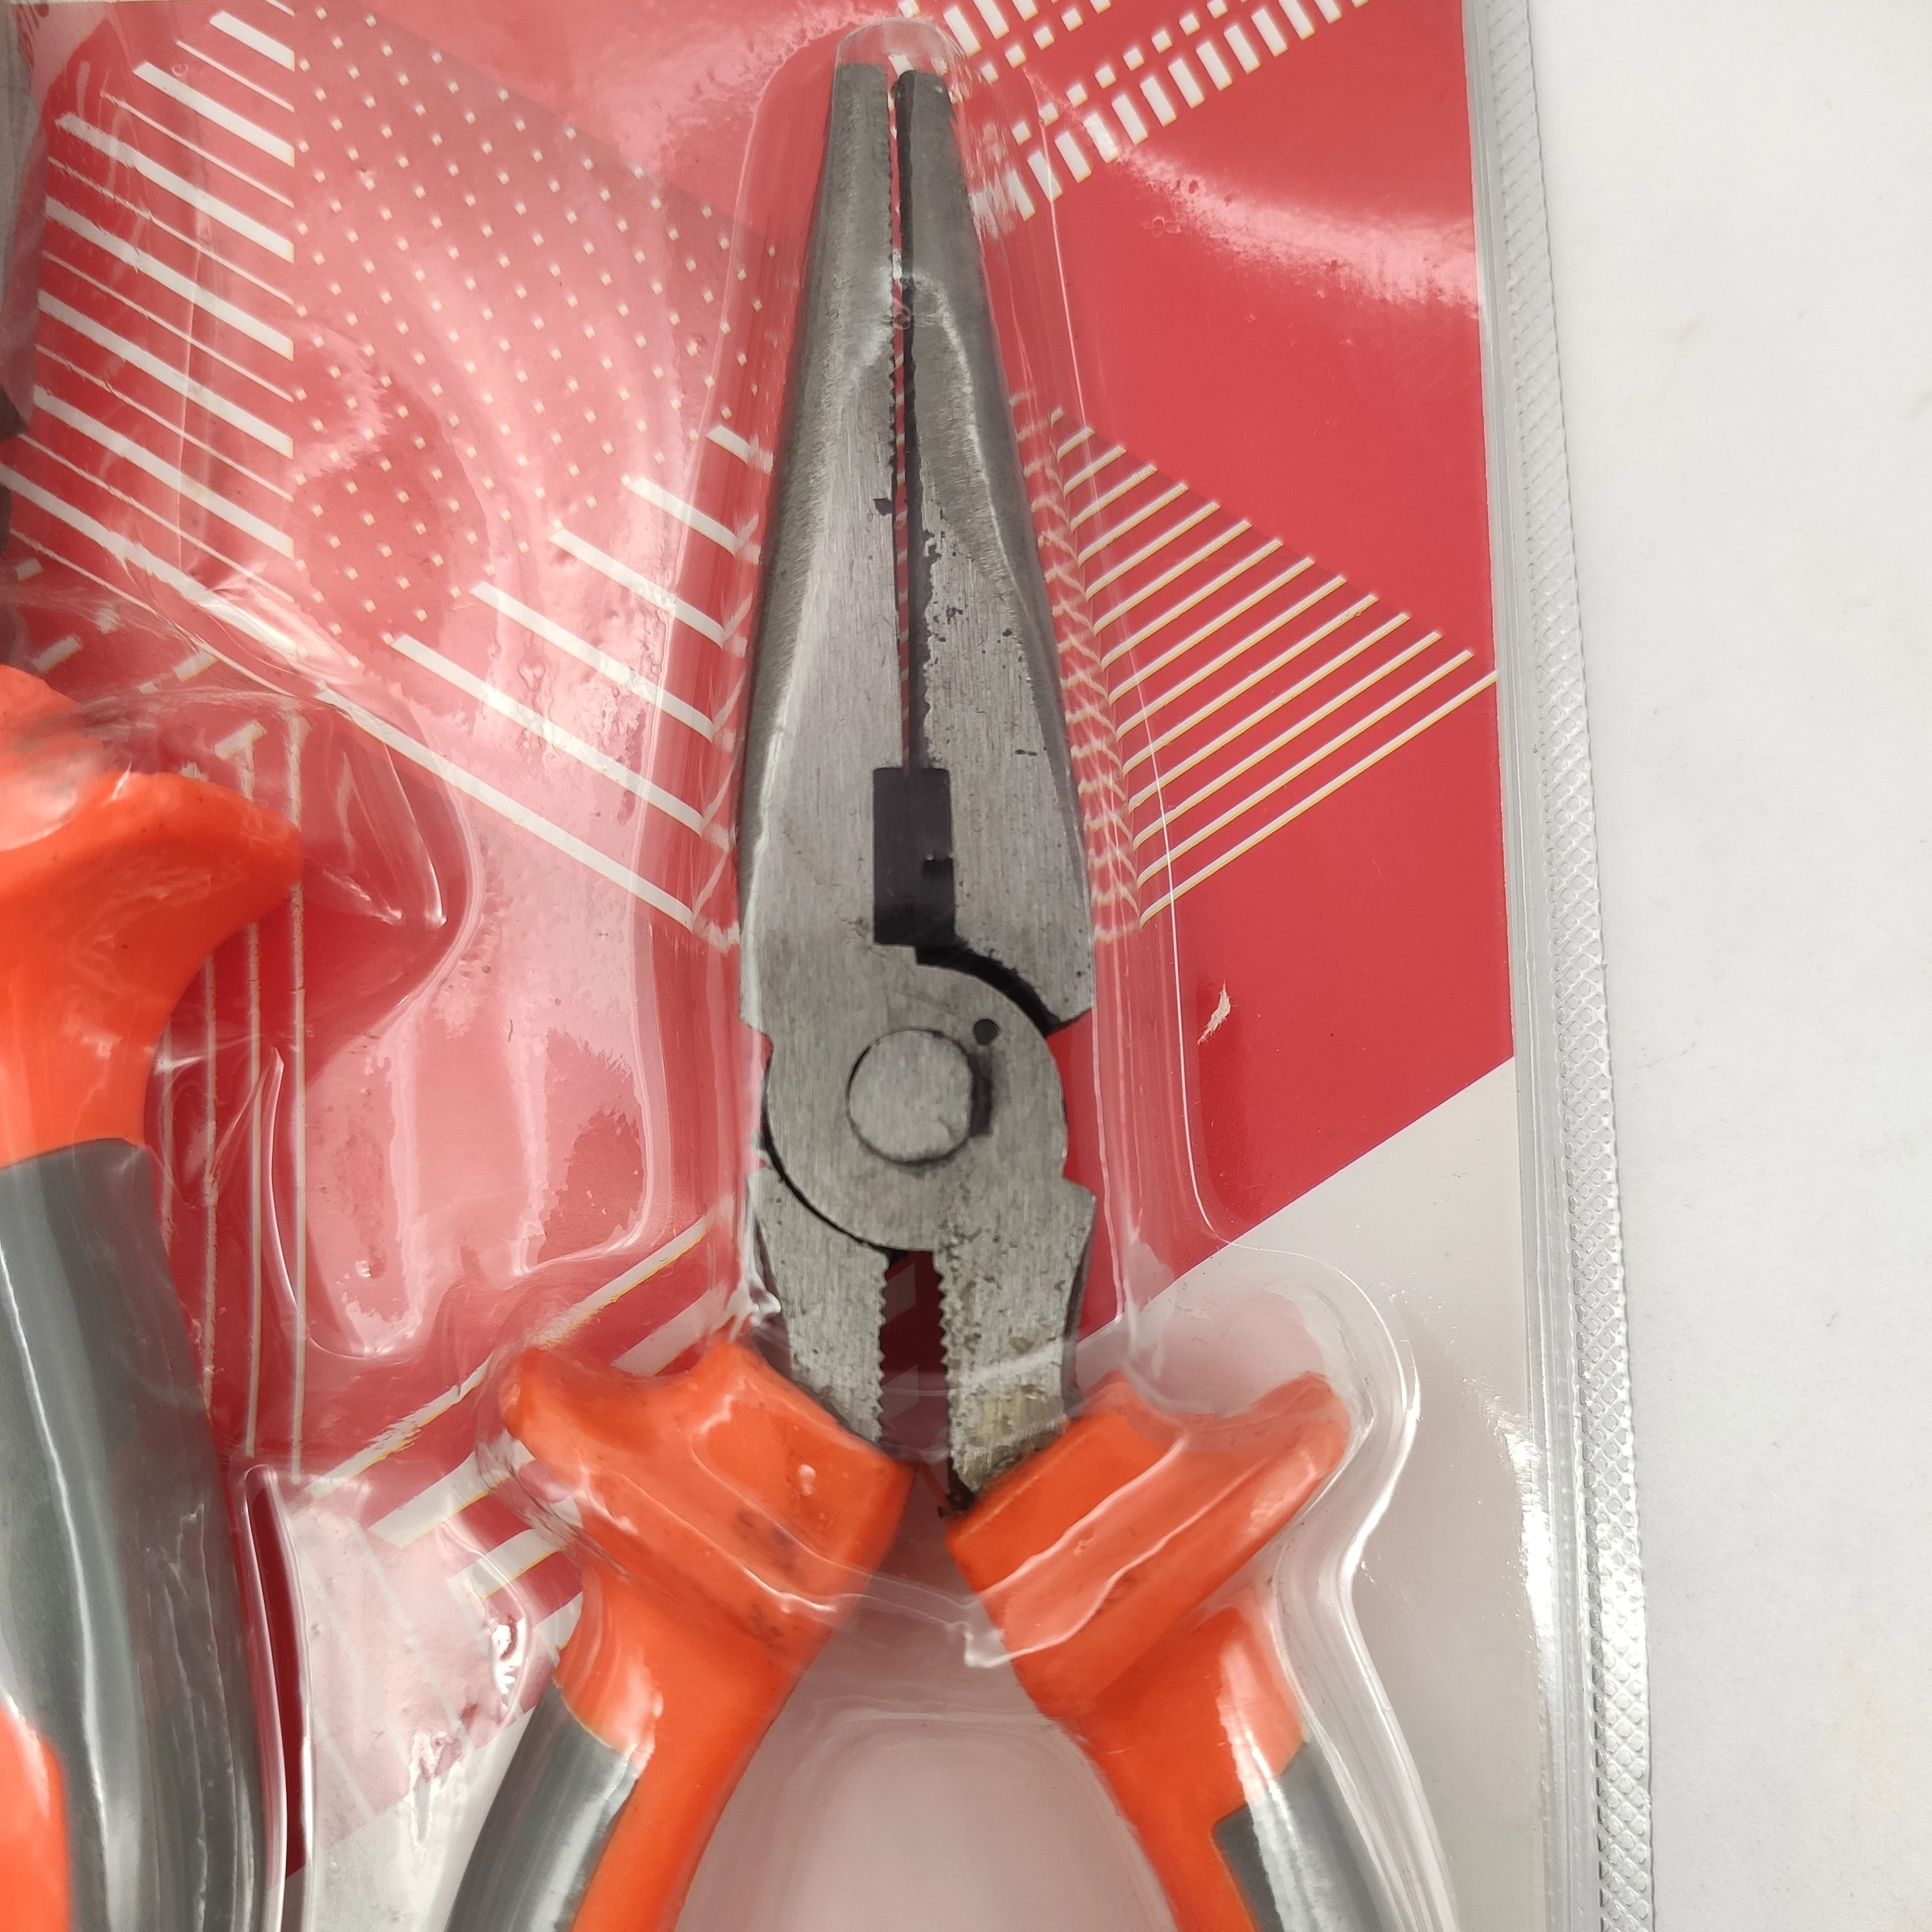 2 pcs household multifunction  pliers set combination pliers long needle nose pliers hand tool kit